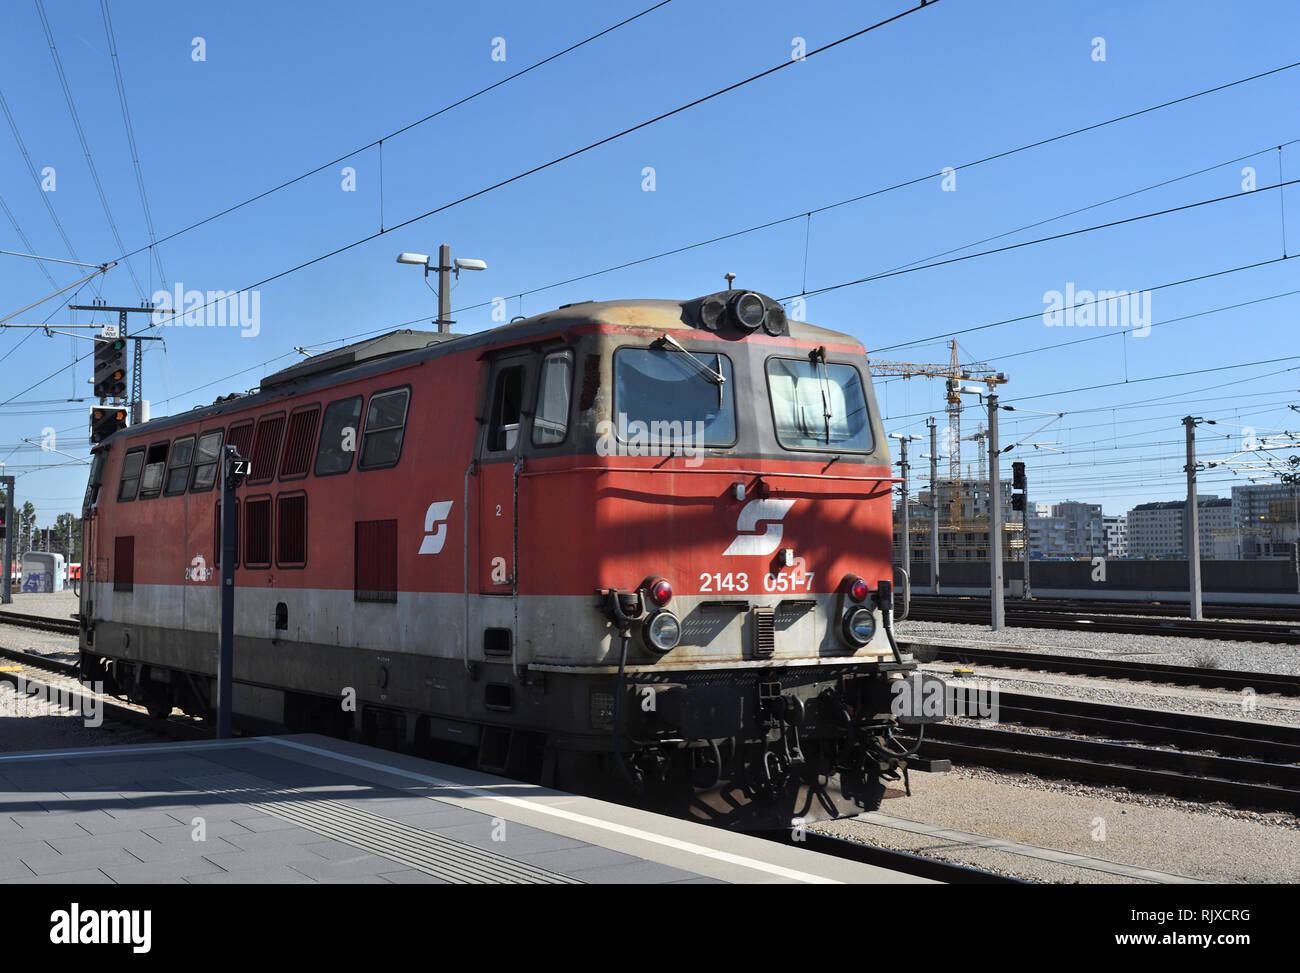 class 2143 diesel locomotive;vienna main;austria Stock Photo